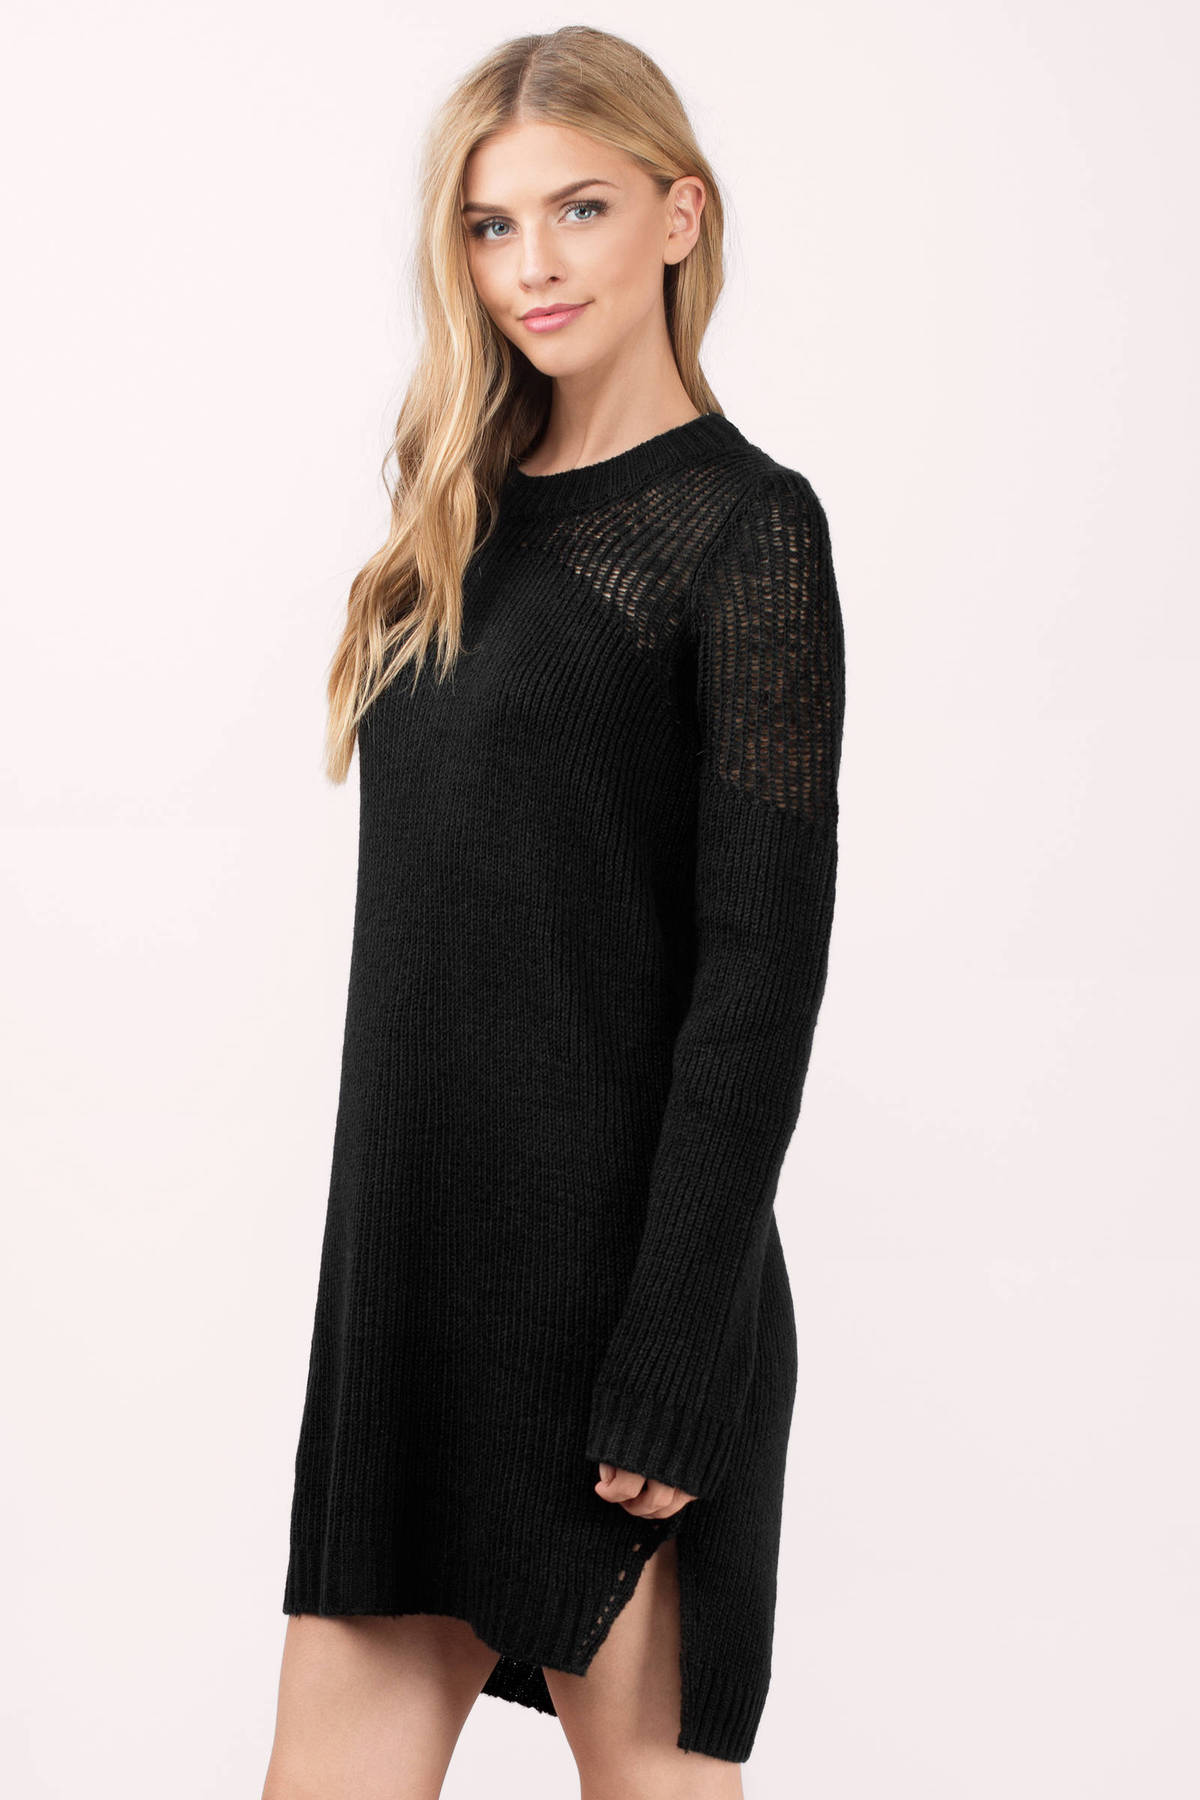 Knit Wit Sweater Dress in Black - $17 | Tobi US